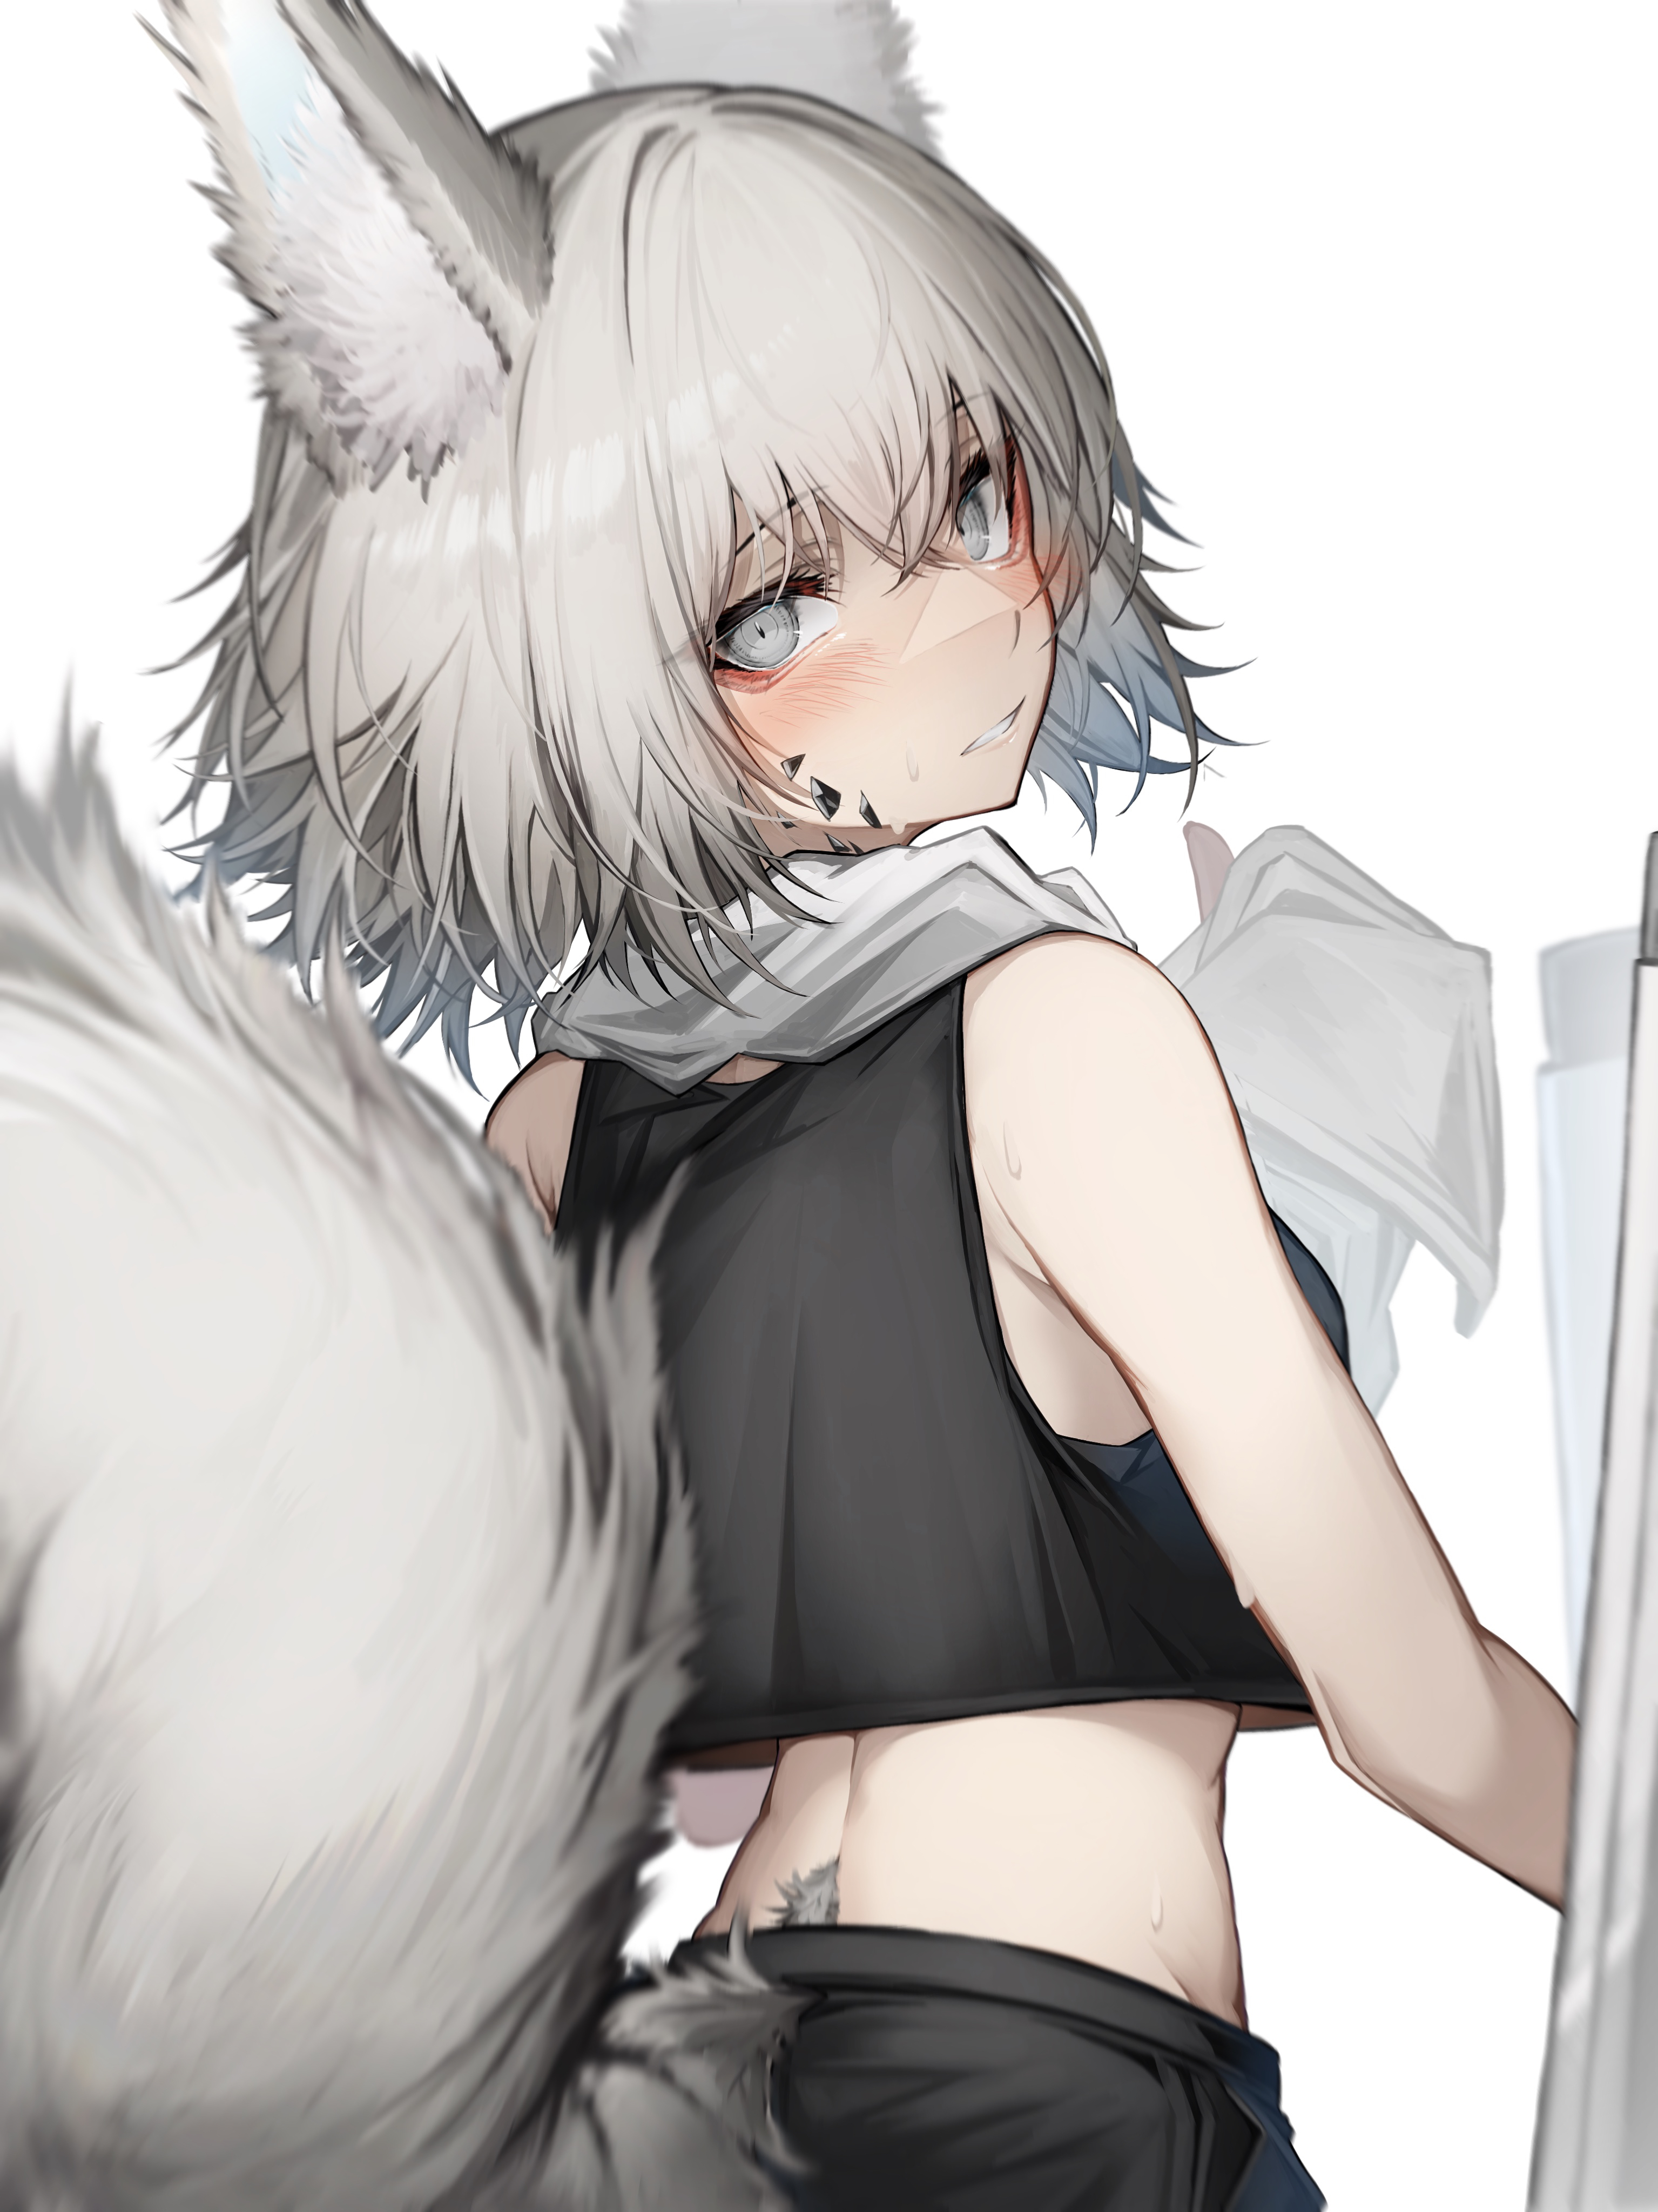 Anime 3070x4096 anime girls Arknights Lappland (Arknights) fox girl fox ears fox tail white hair